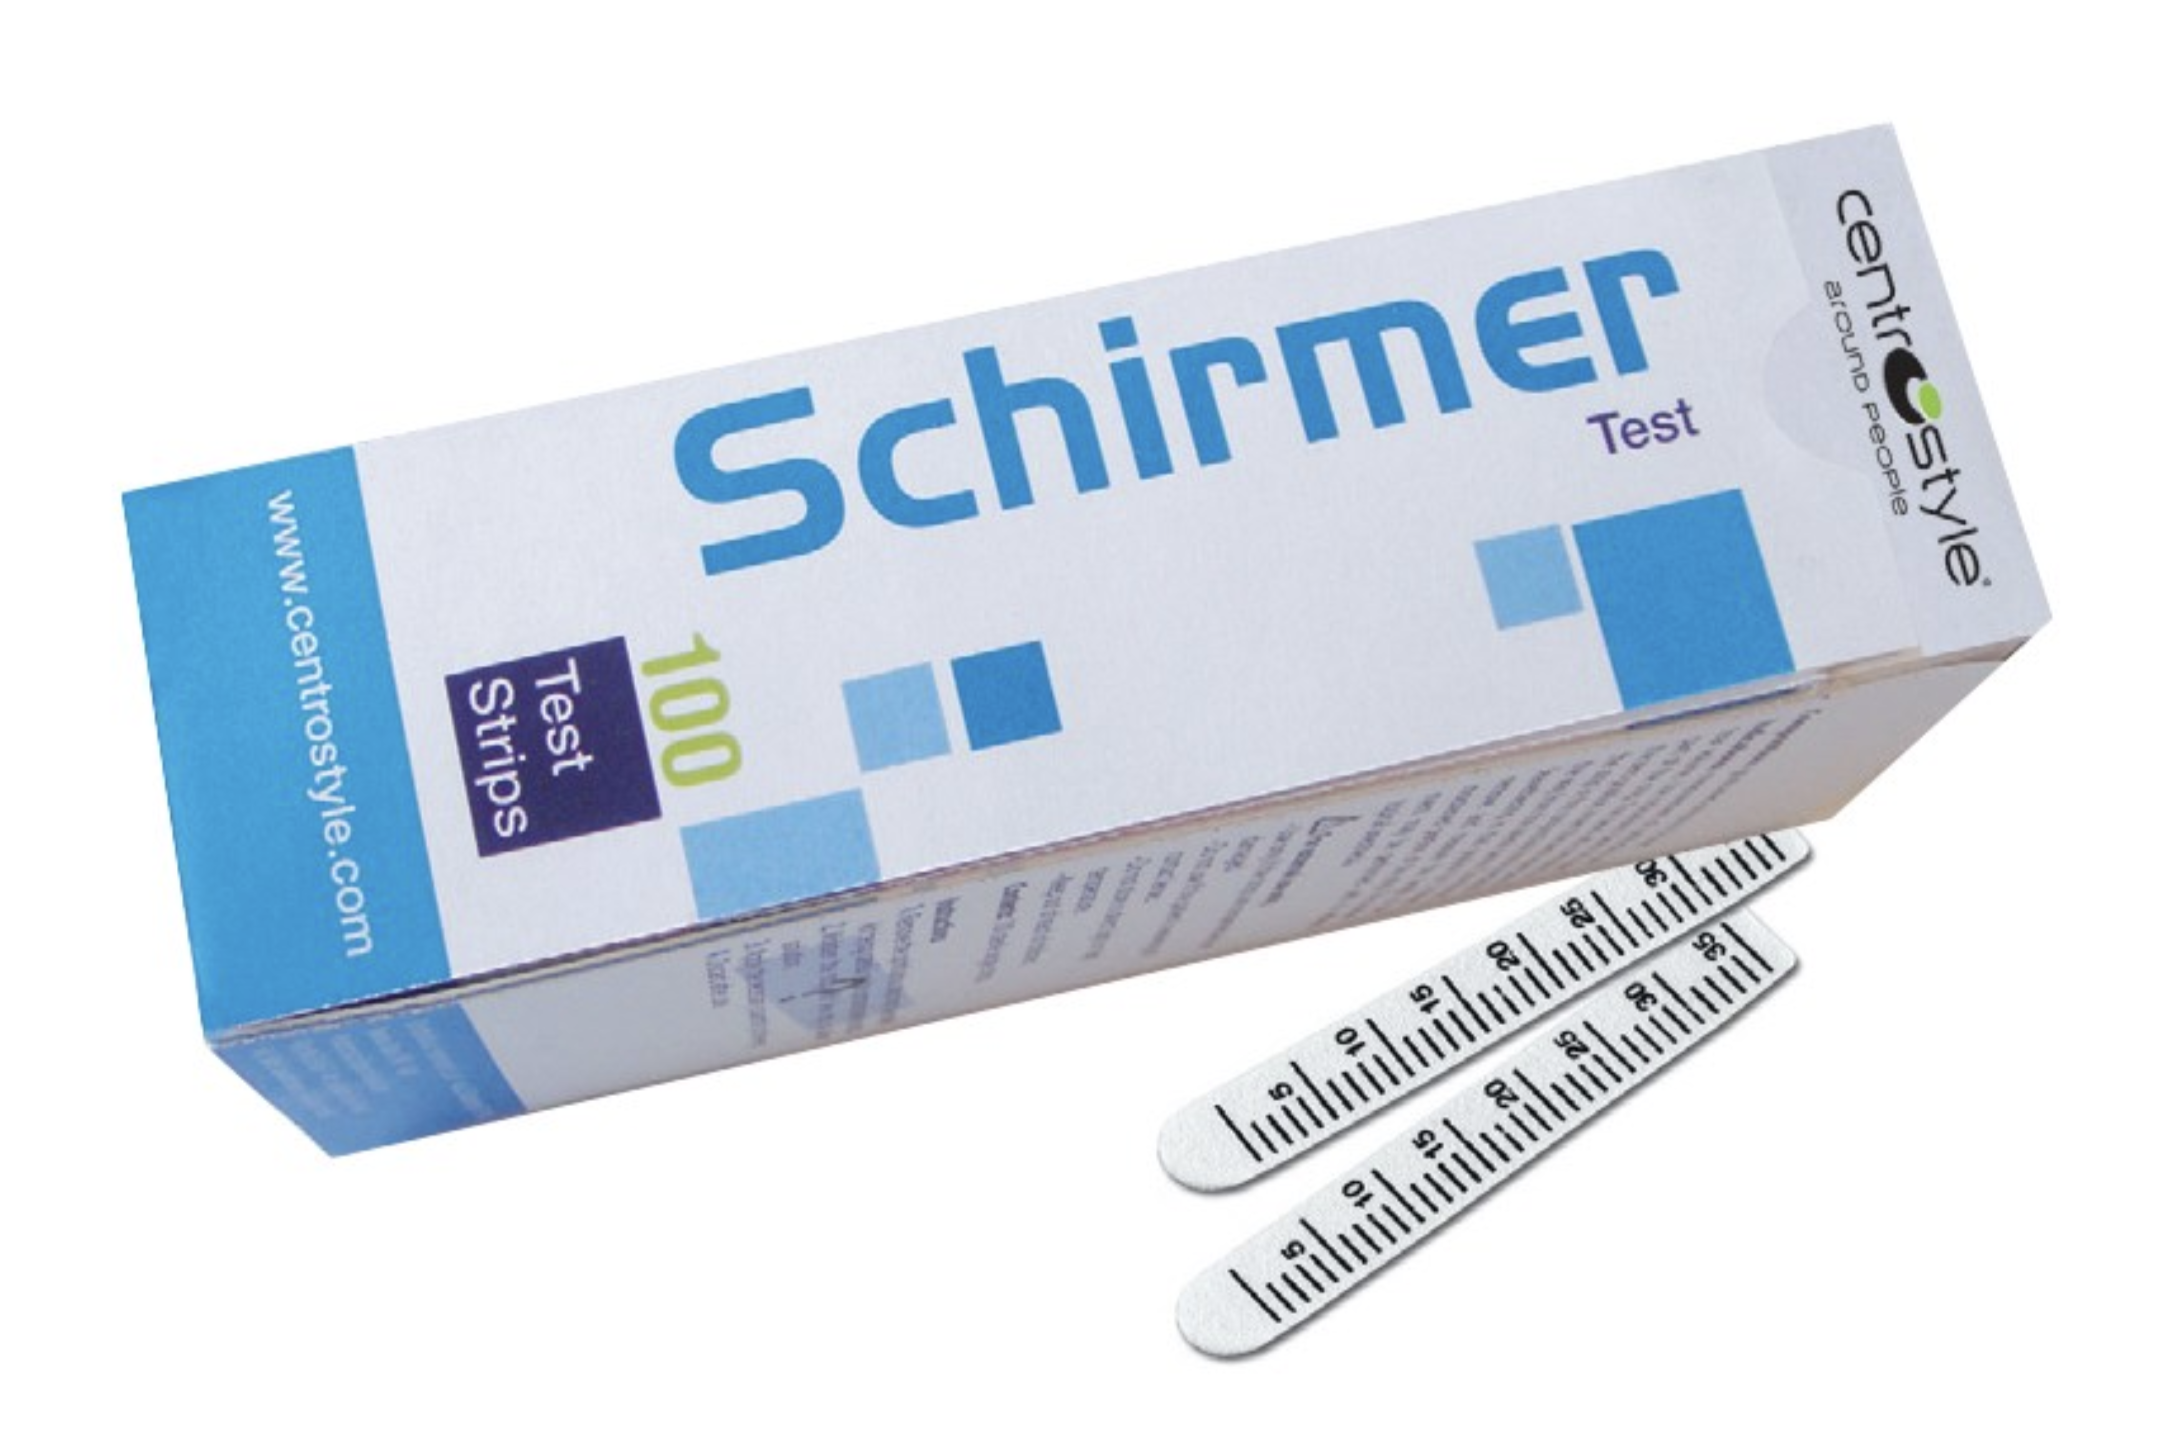 Schirmer Tear Test Strips - Centrostyle  *INDENT* image 0